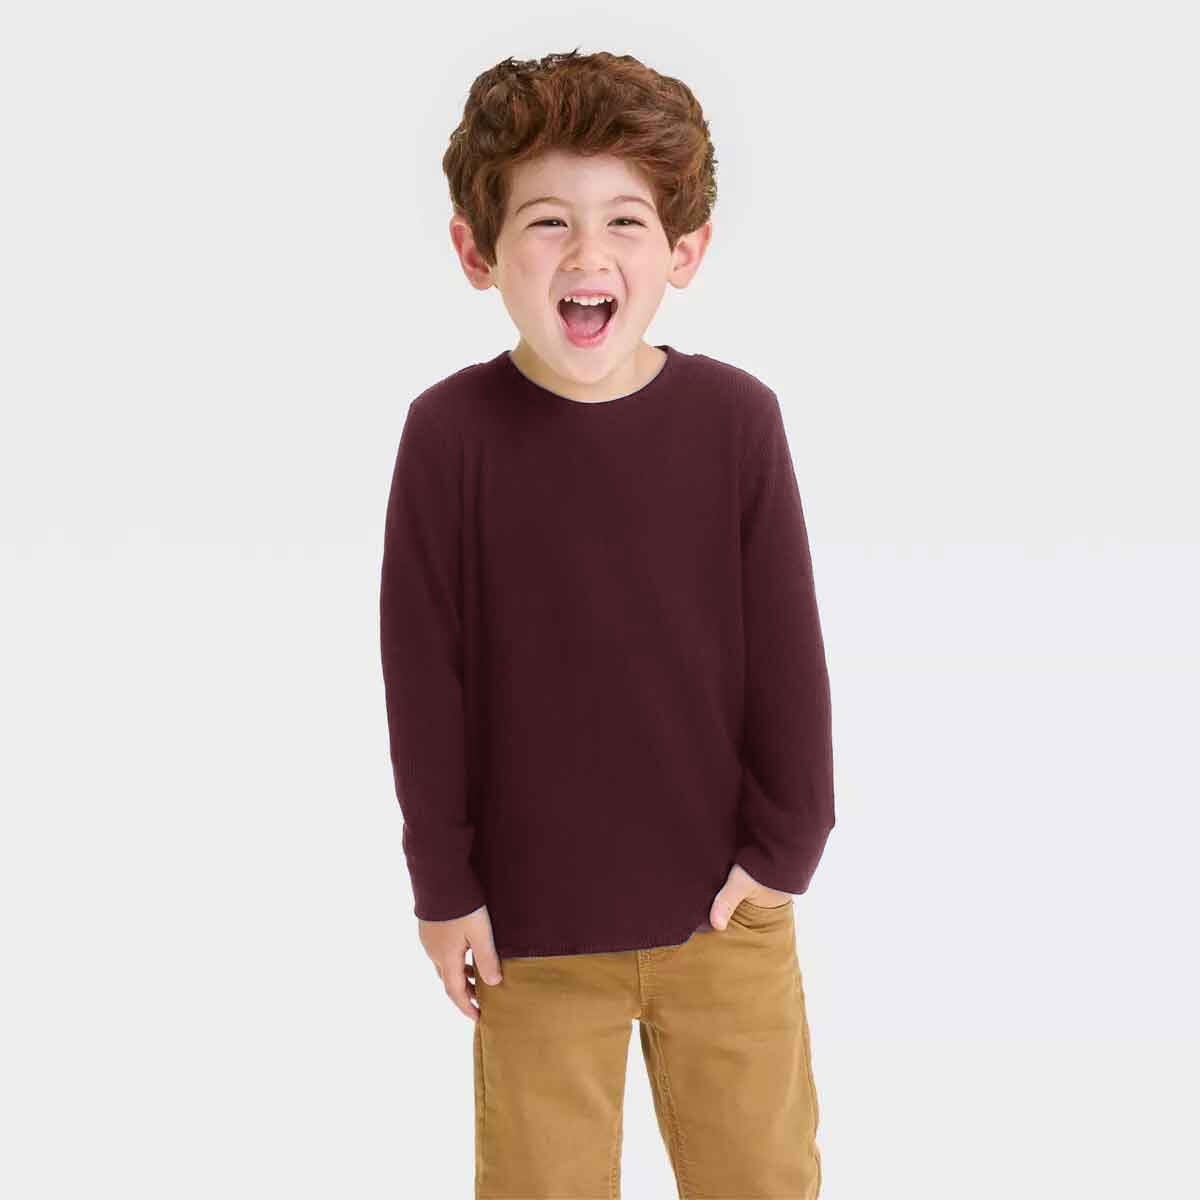 Excellent Kid's Thermal Long Sleeve Winter Knit Wear Shirt Boy's Sweat Shirt SRL Maroon 18 (6-9 Months) 